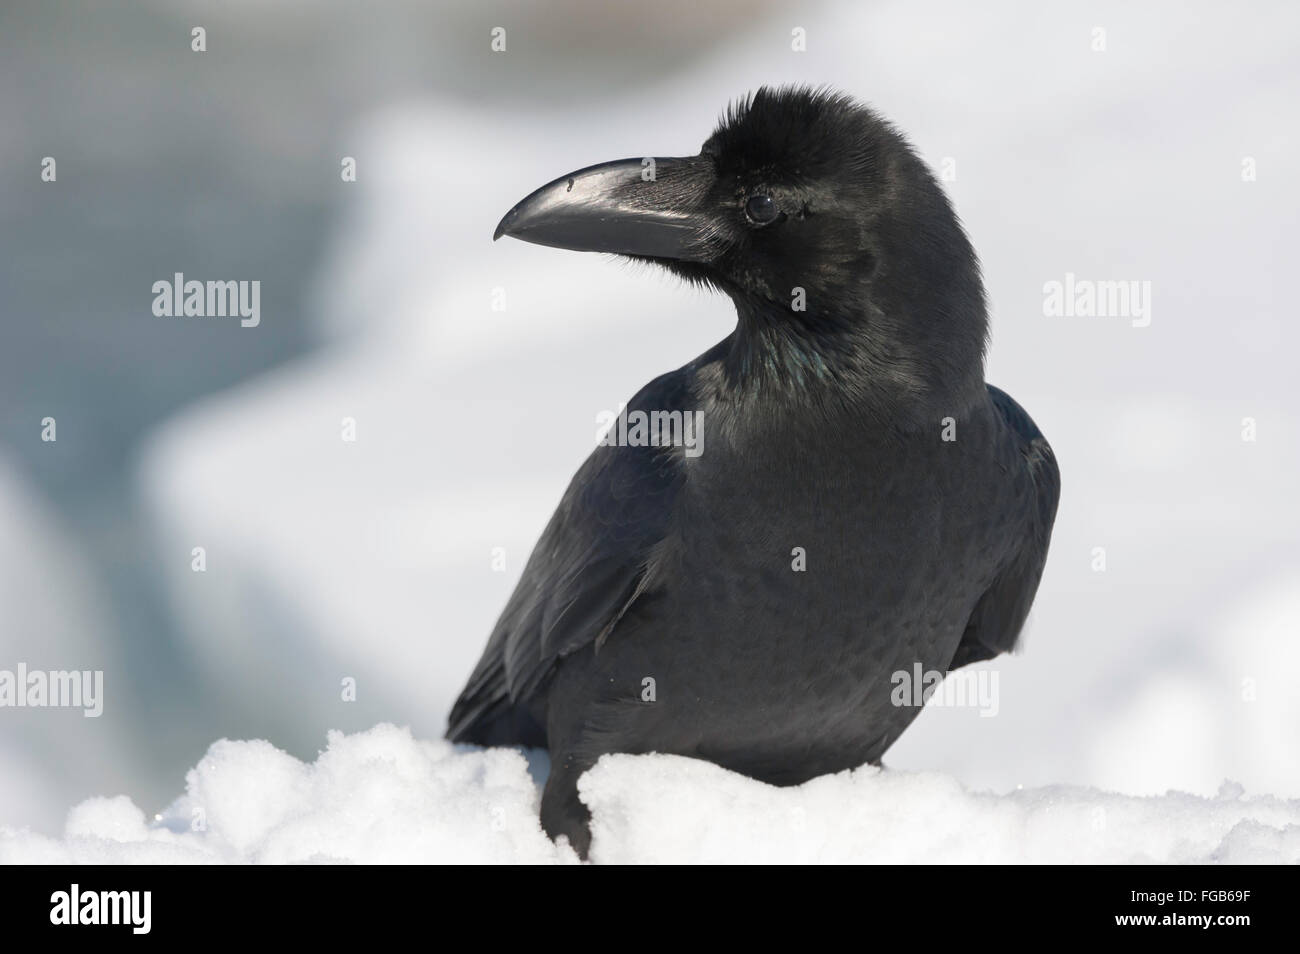 Dschungel Krähe, große verrechnet oder dick-billed Crow, japanische Krähe, Corvus Macrorhynchos Japonensis, Rausu, Hokkaido, Japan Stockfoto